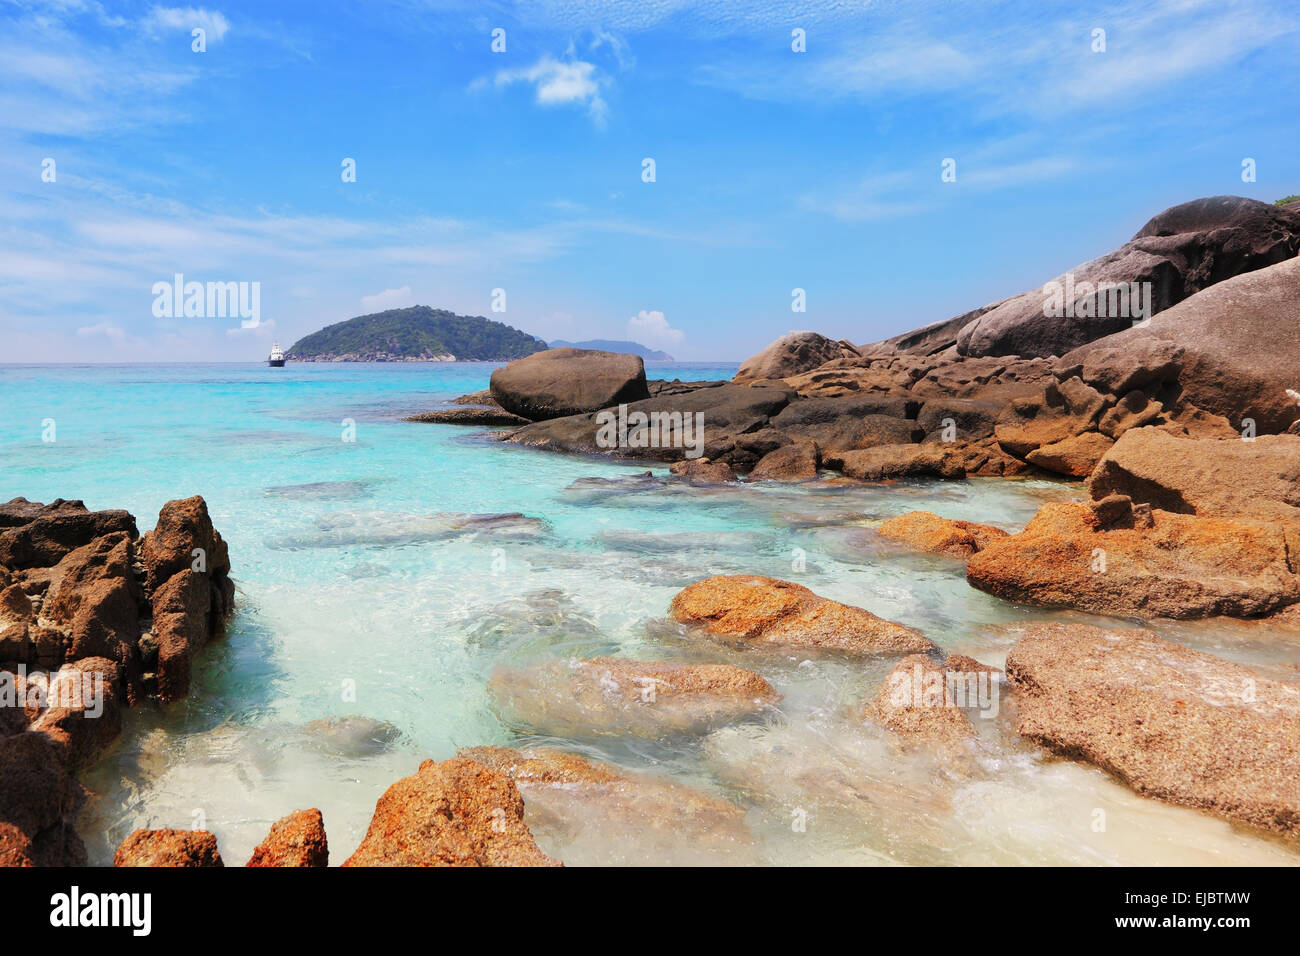 Similansky islands, Andaman Sea, Thailand Stock Photo